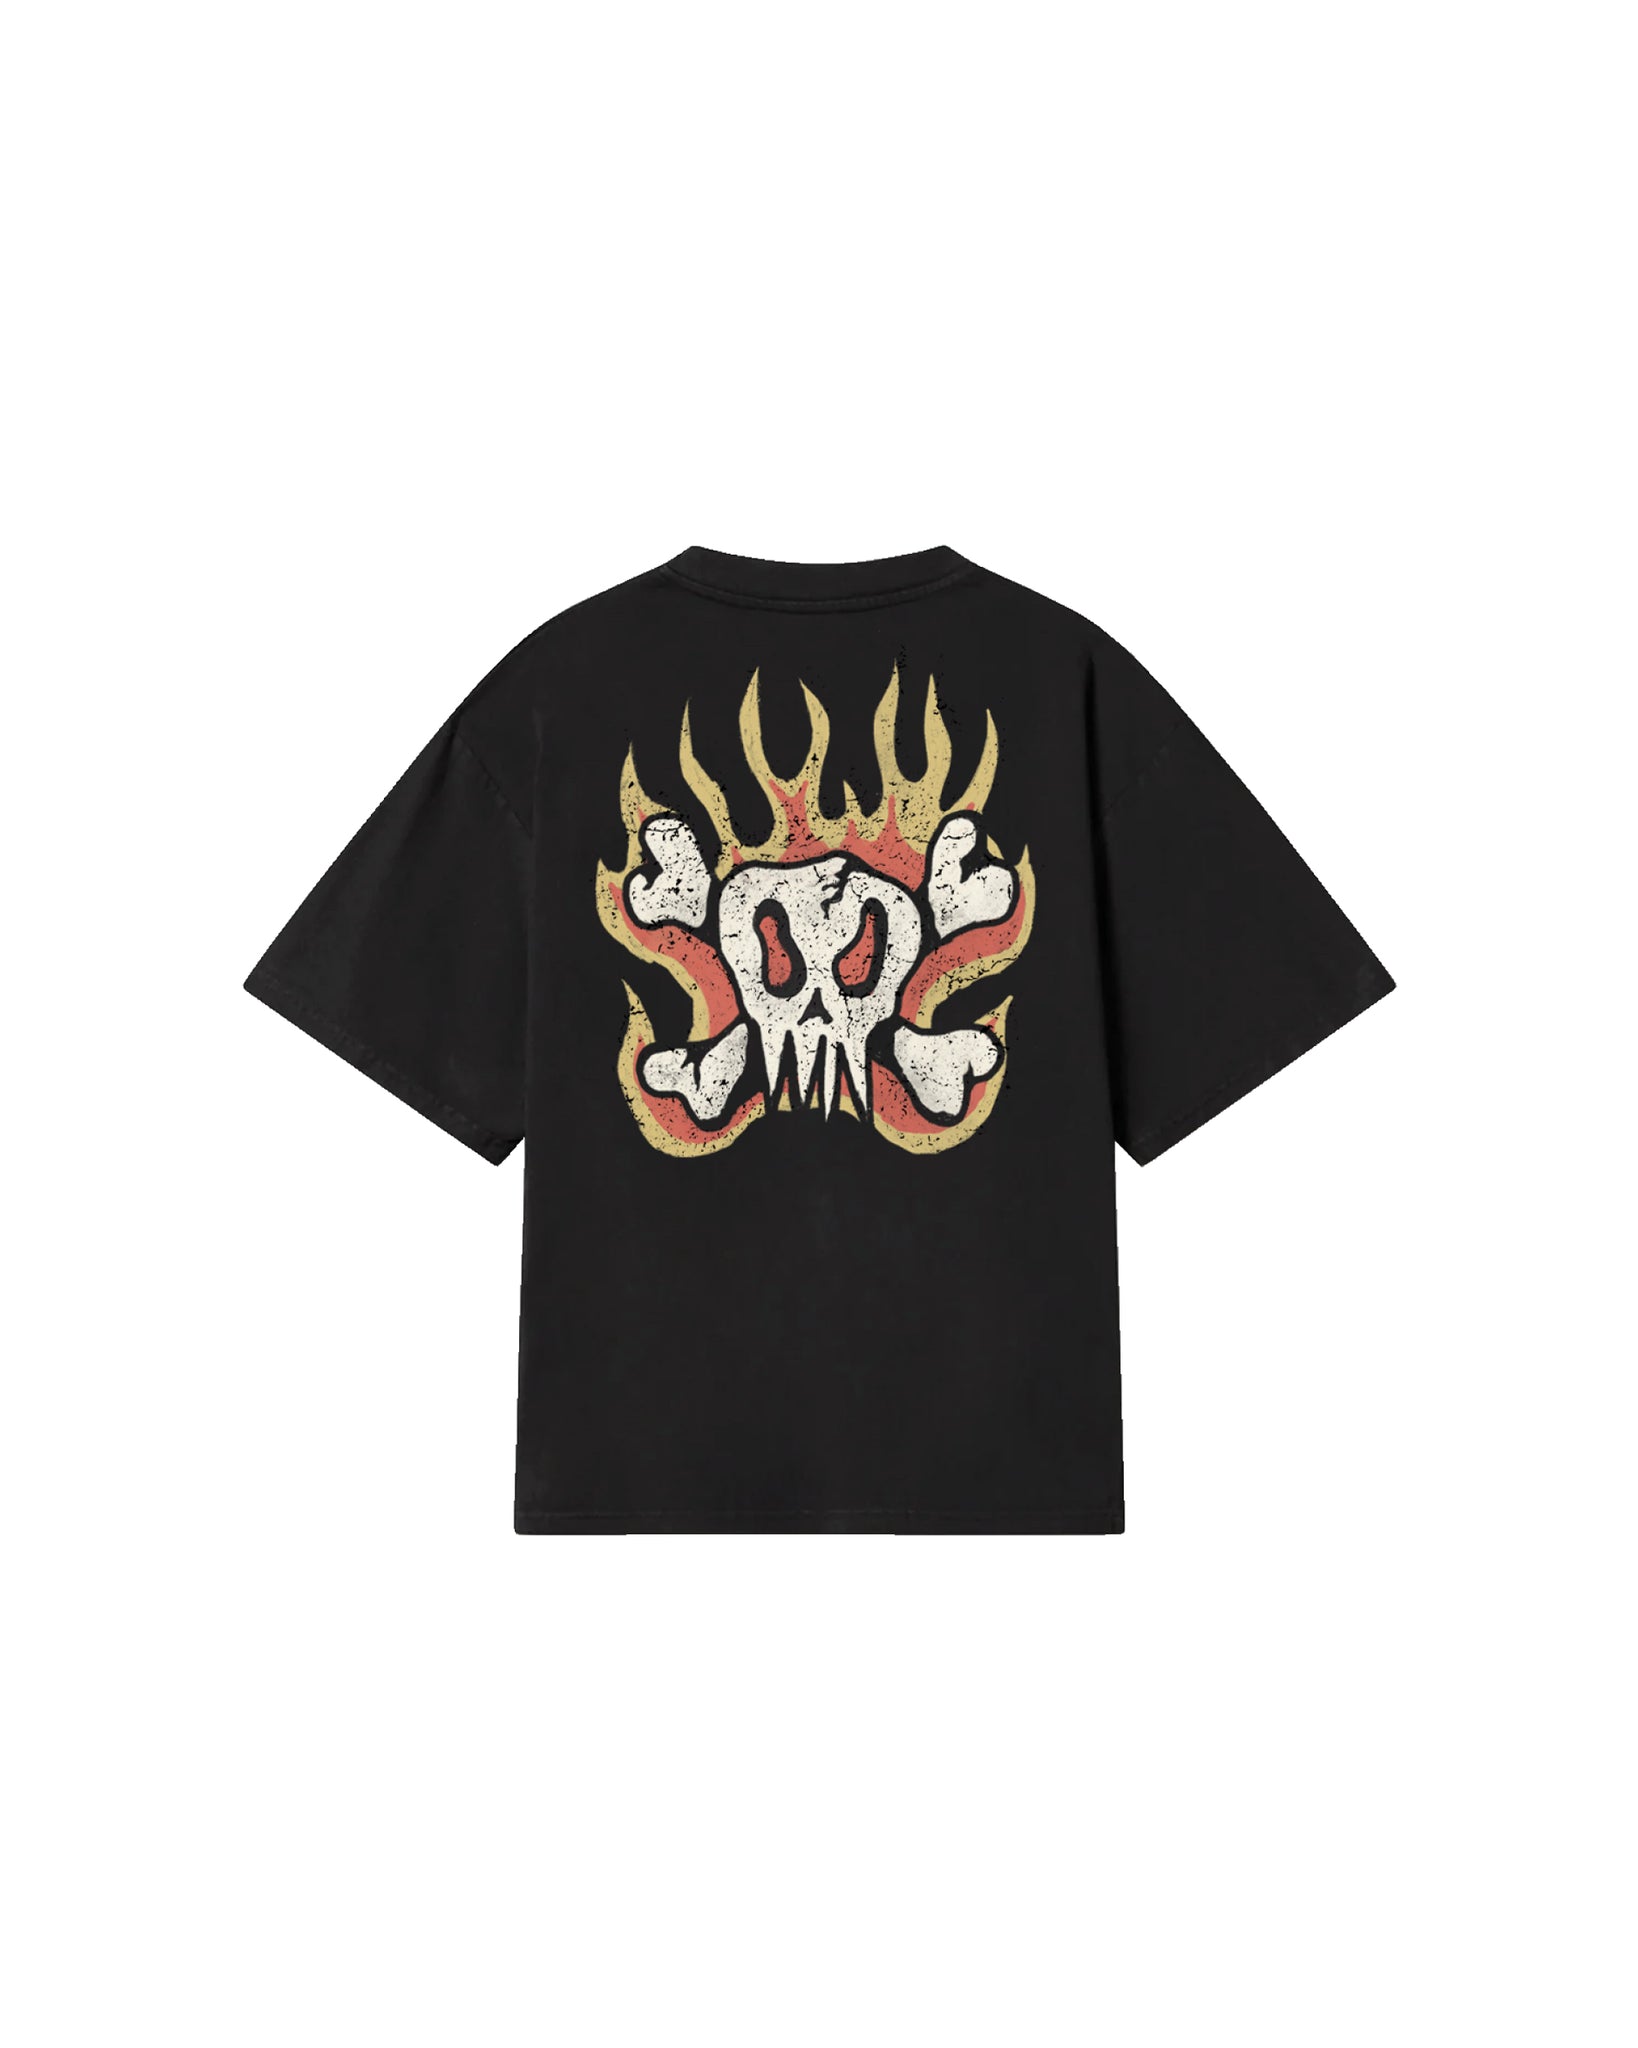 Flame t-shirt